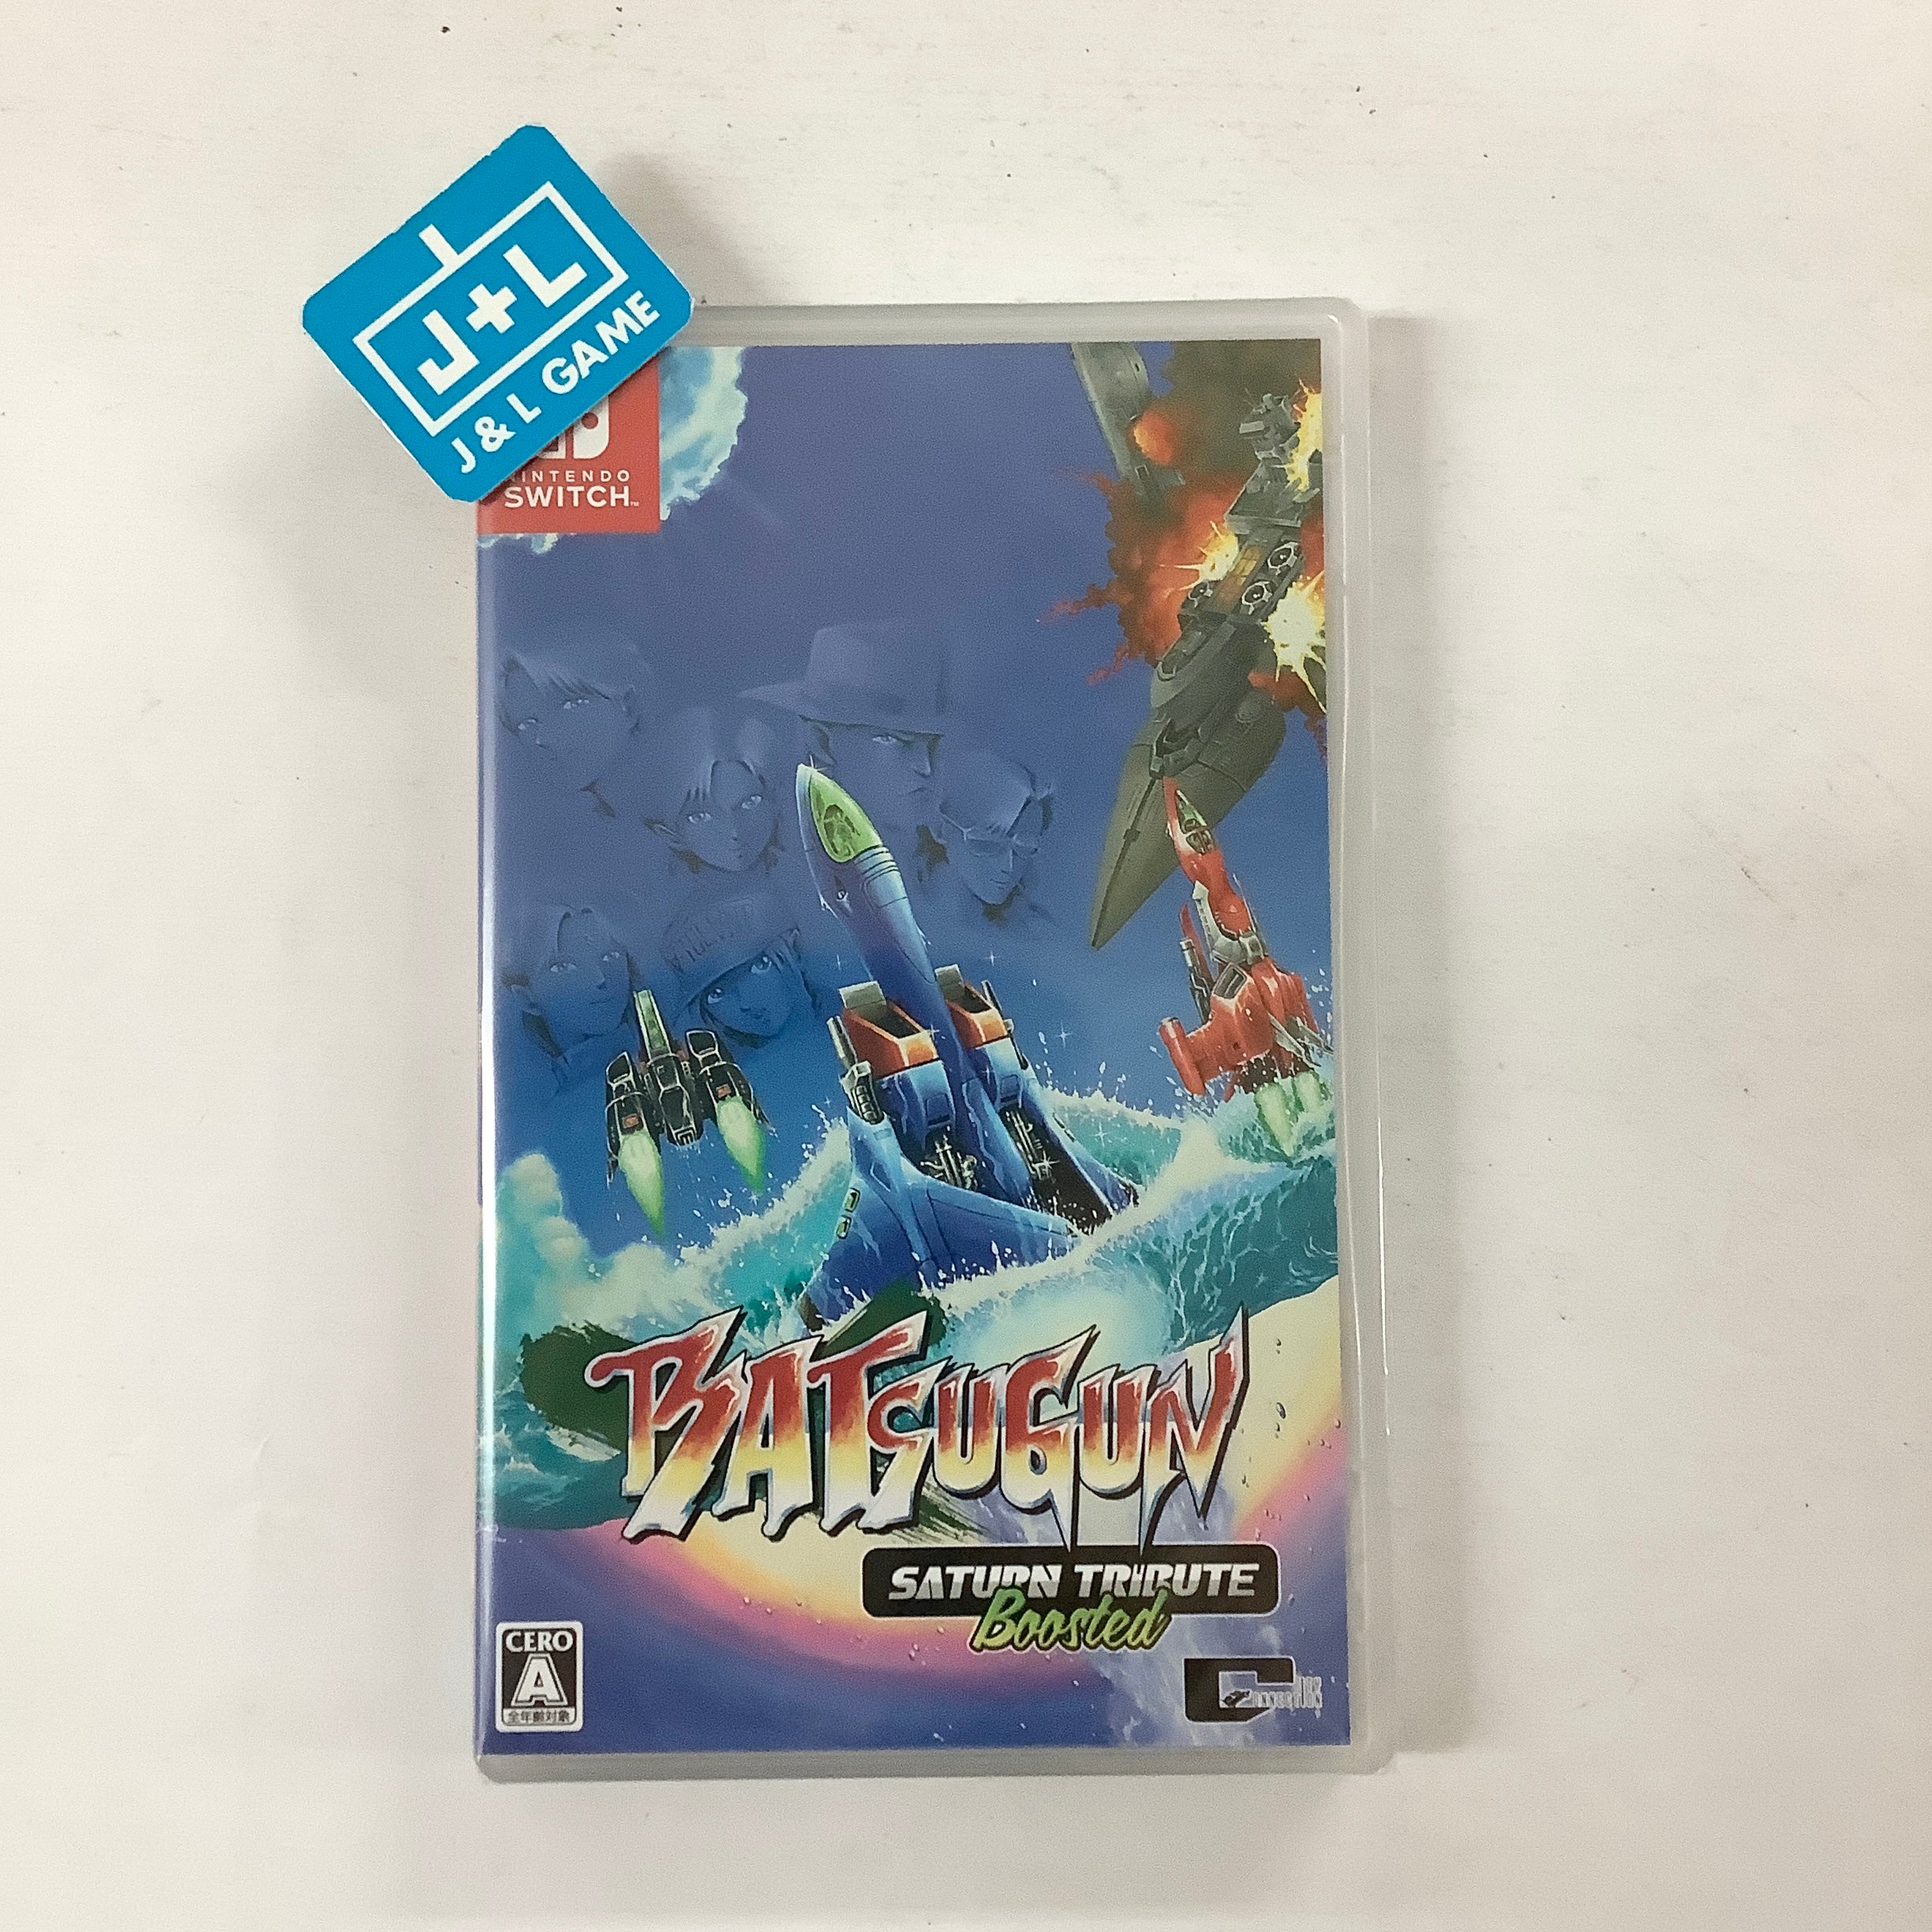 Batsugun Saturn Tribute Boosted - (NSW) Nintendo Switch (Japanese Import)